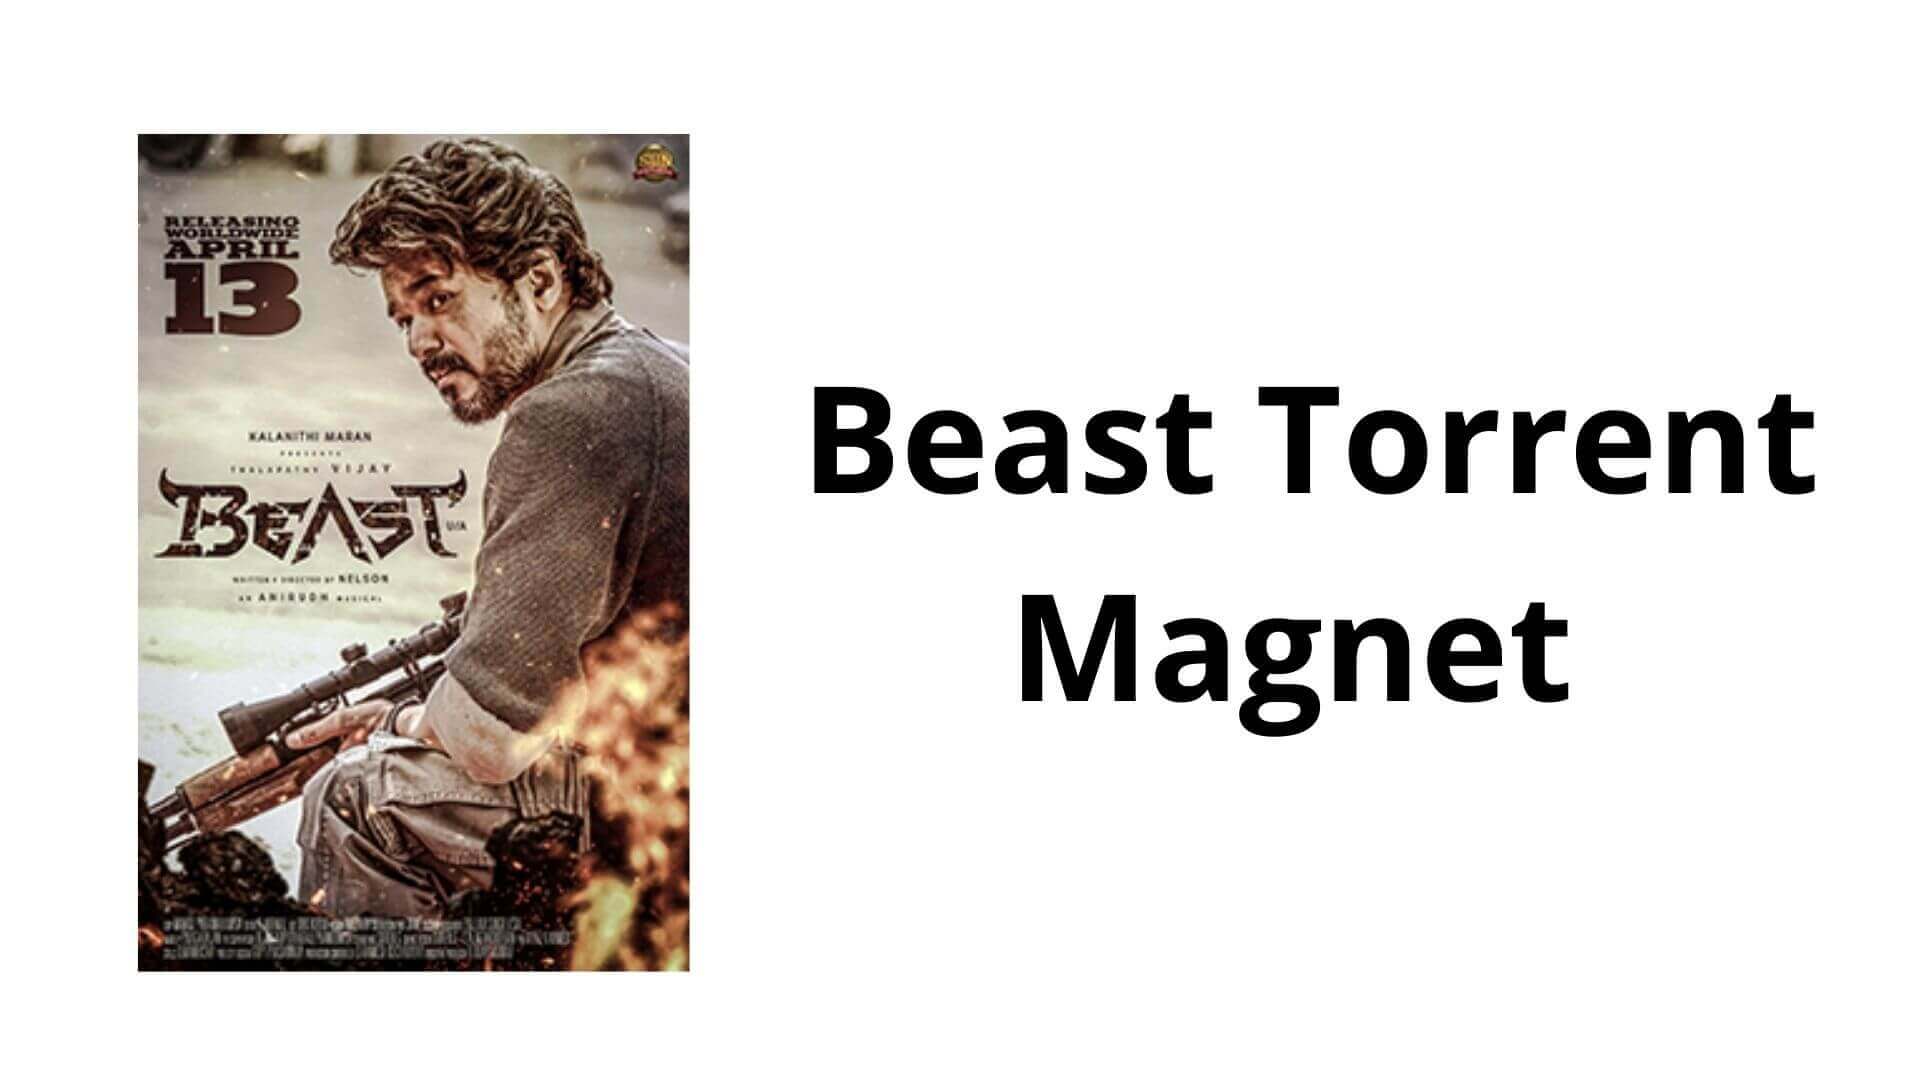 Beast Torrent Magnet Online Leaked By Torrent Sites